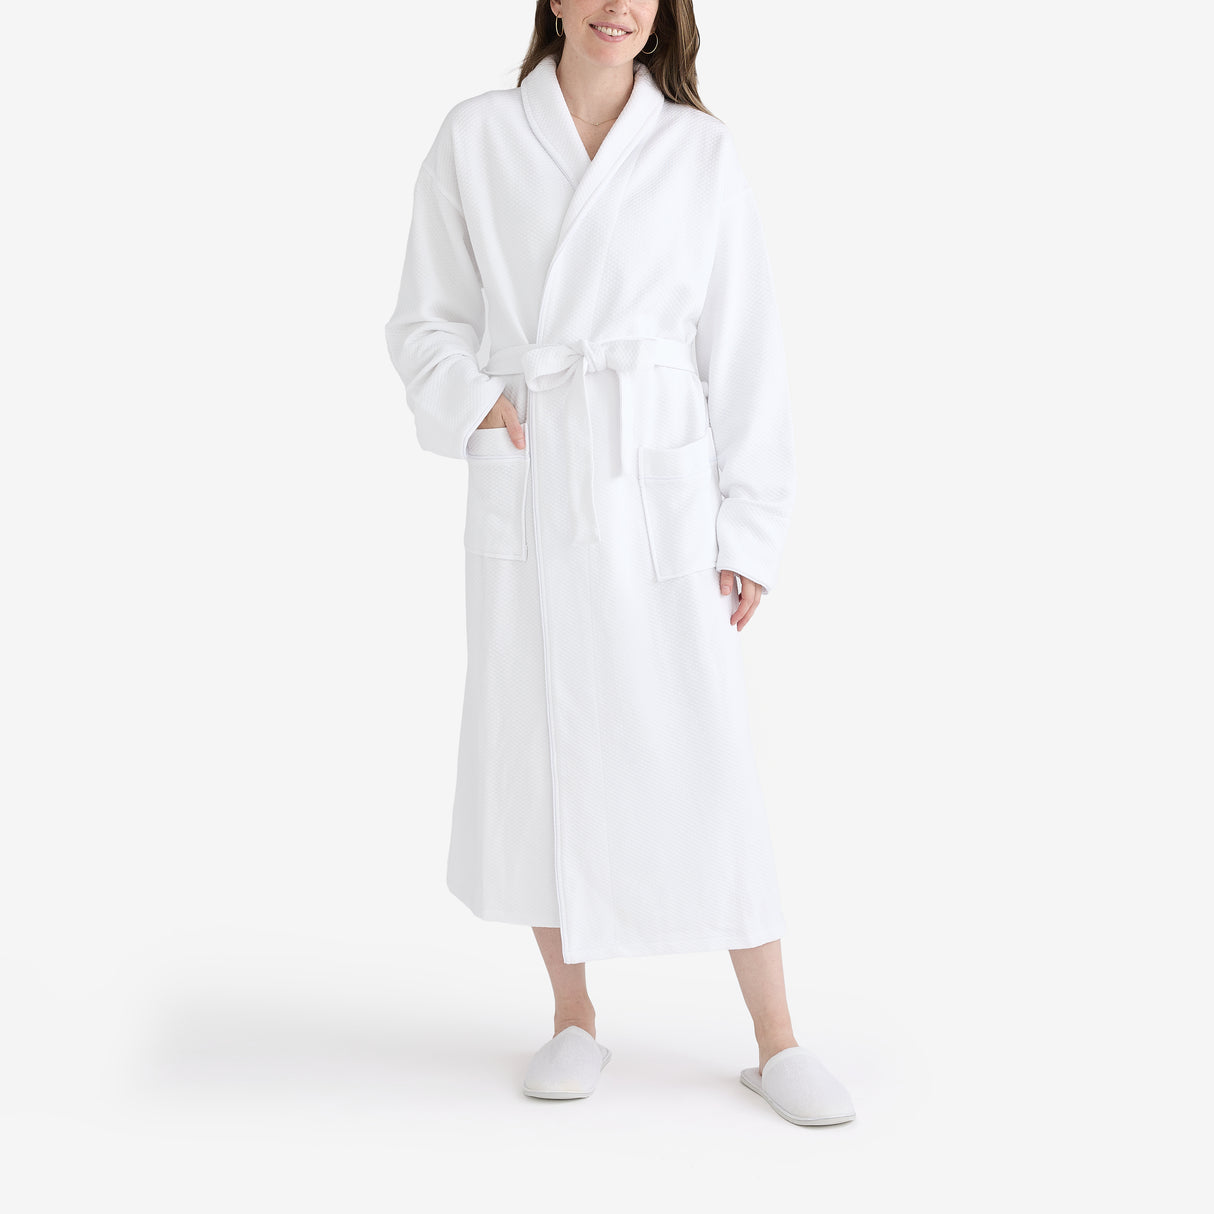 Women wearing a white hotel bathrobe and slippers